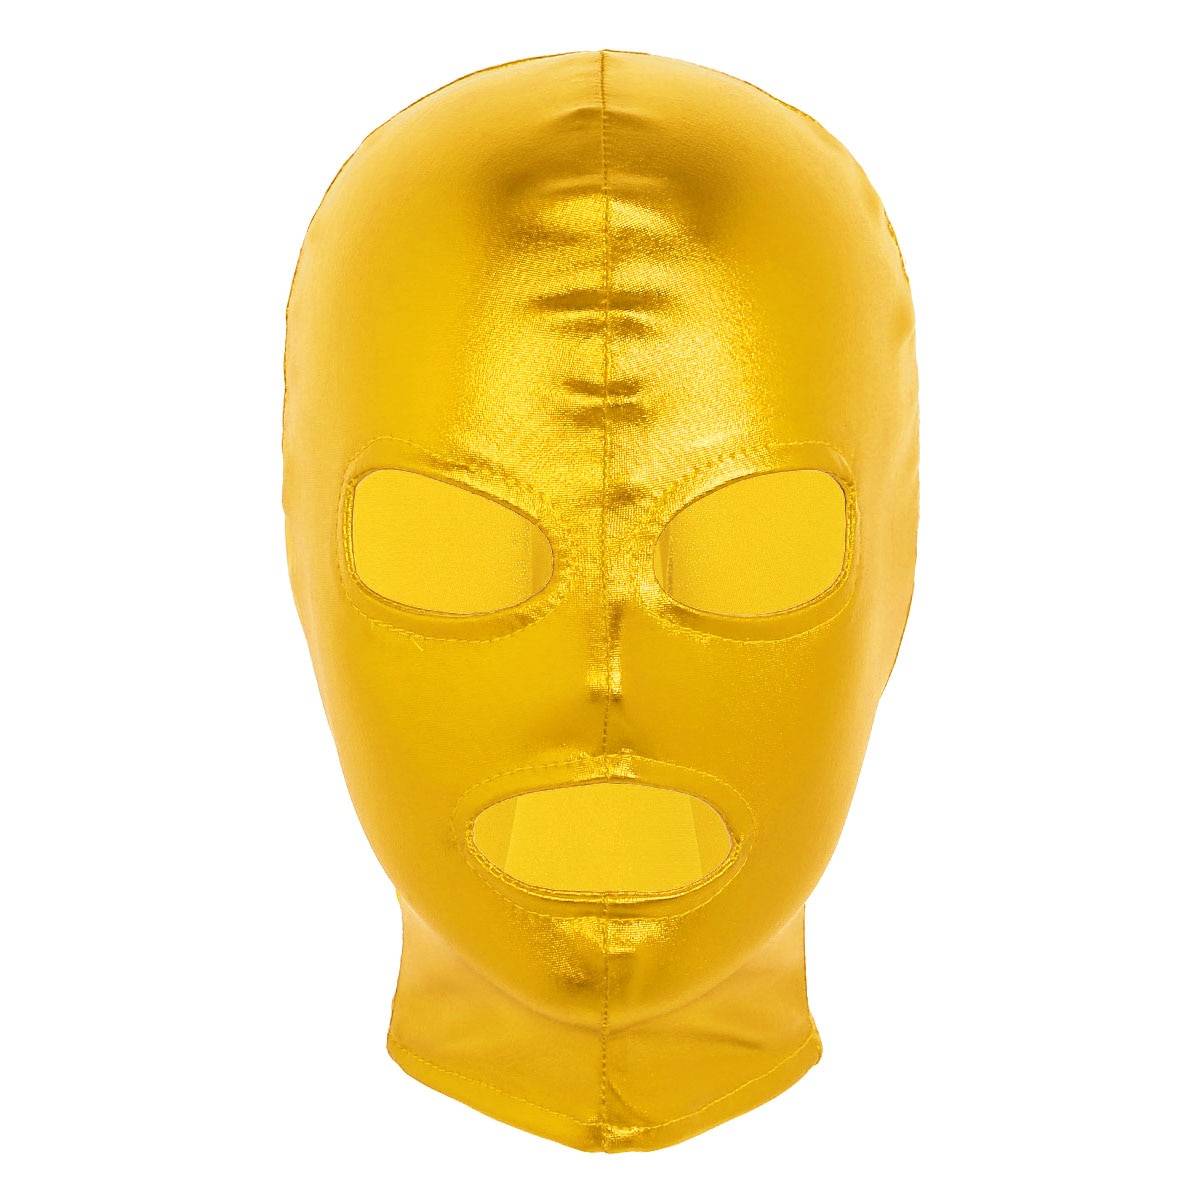 Máscara facial metálica brilhante, "unissex mulheres homens cosplay máscara do rosto látex olhos e boca abertos máscara facial capuz para fantasia de dramatização